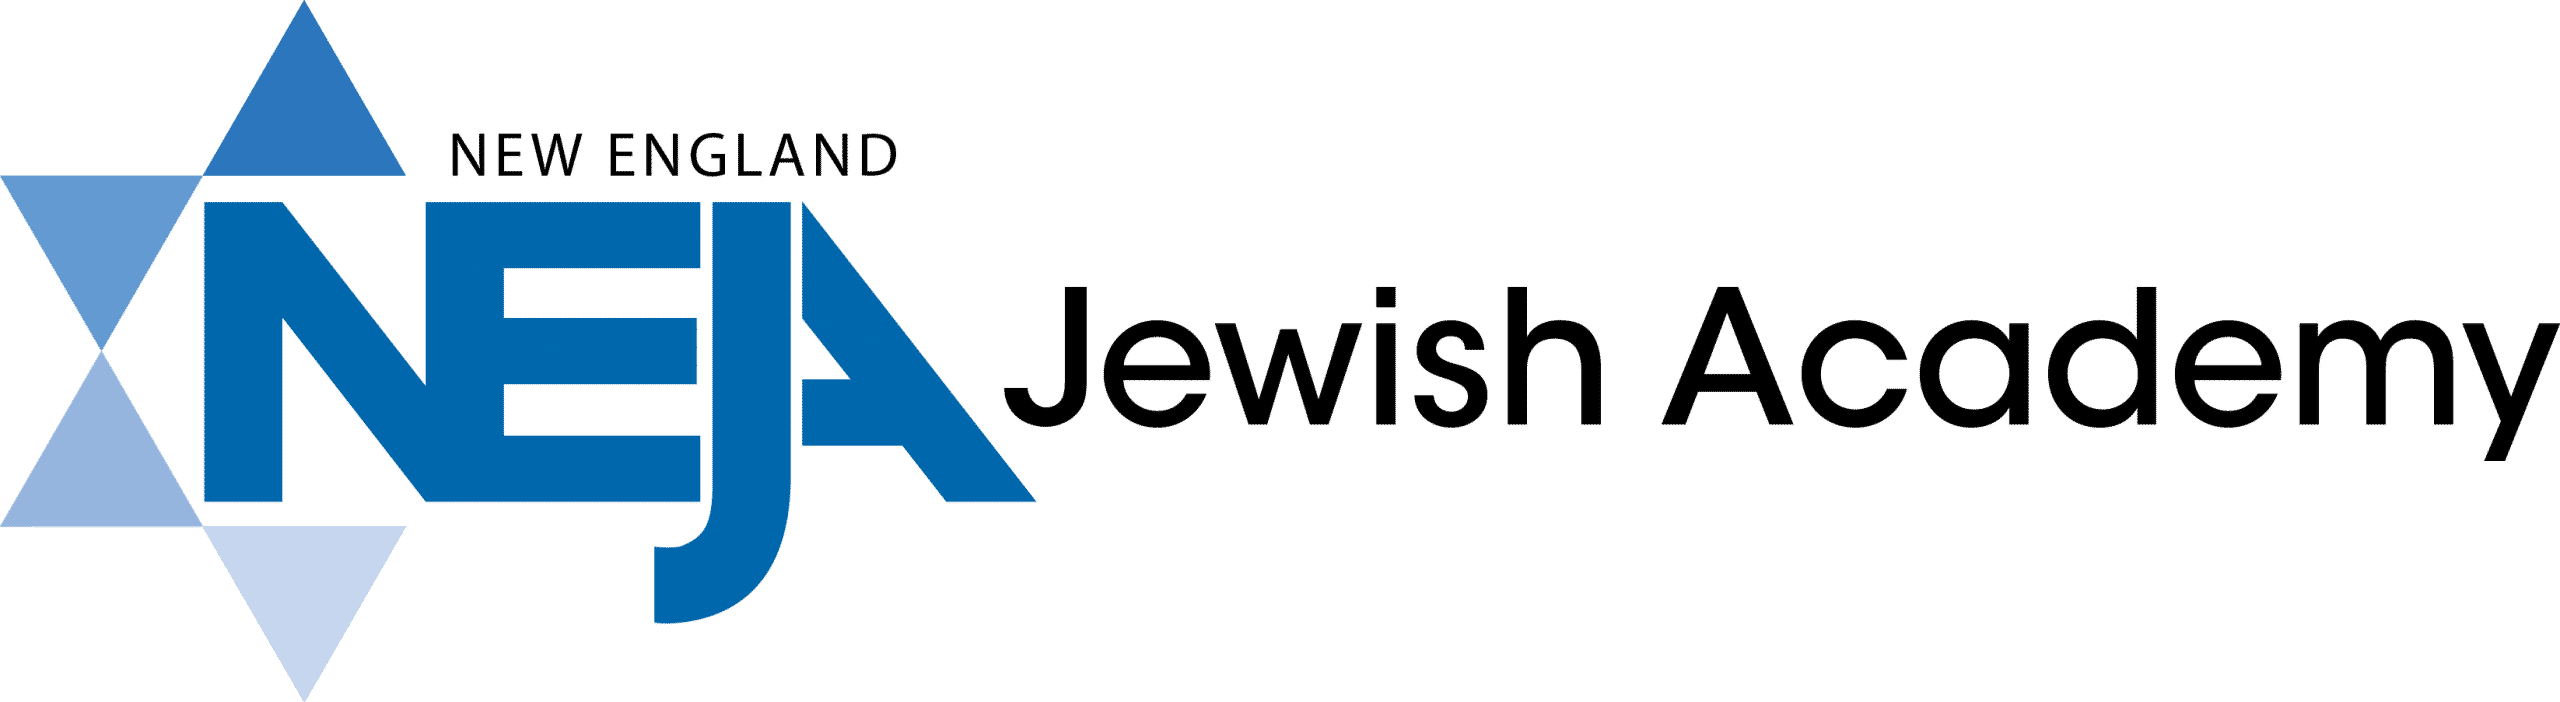 New England Jewish Academy